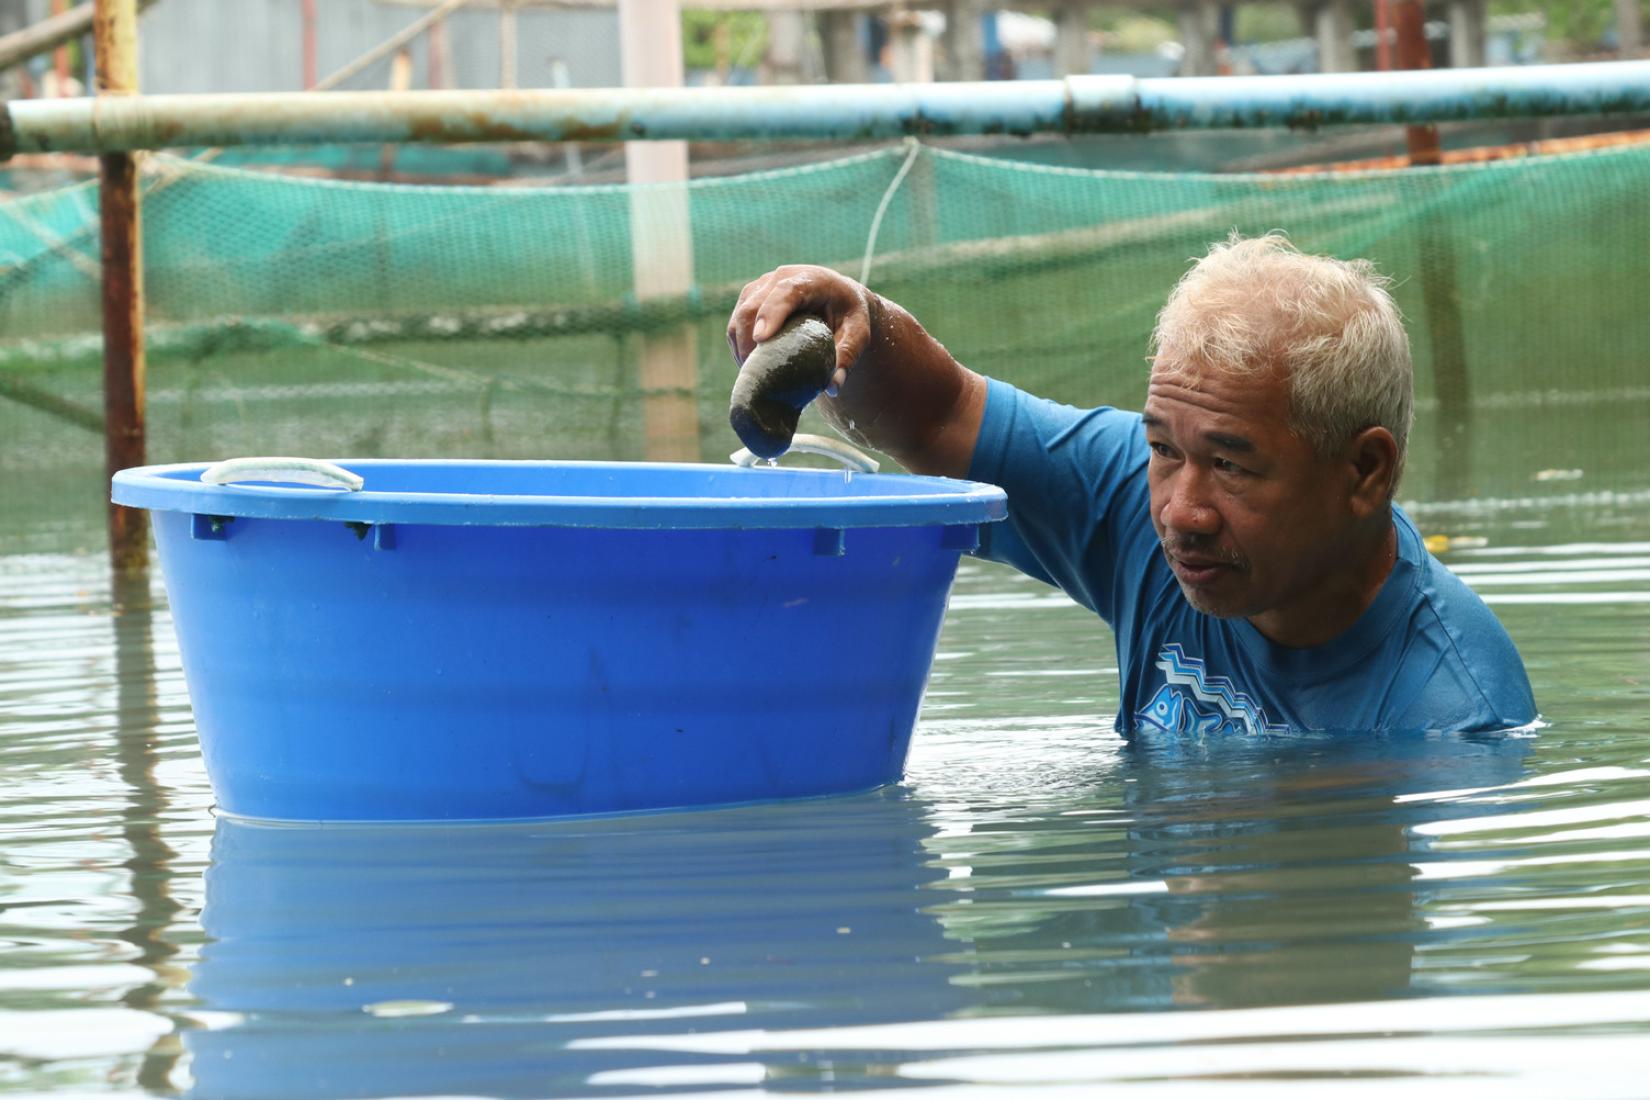 Philippines Bureau of Fisheries and Aquatic Resources staff harvesting sandfish